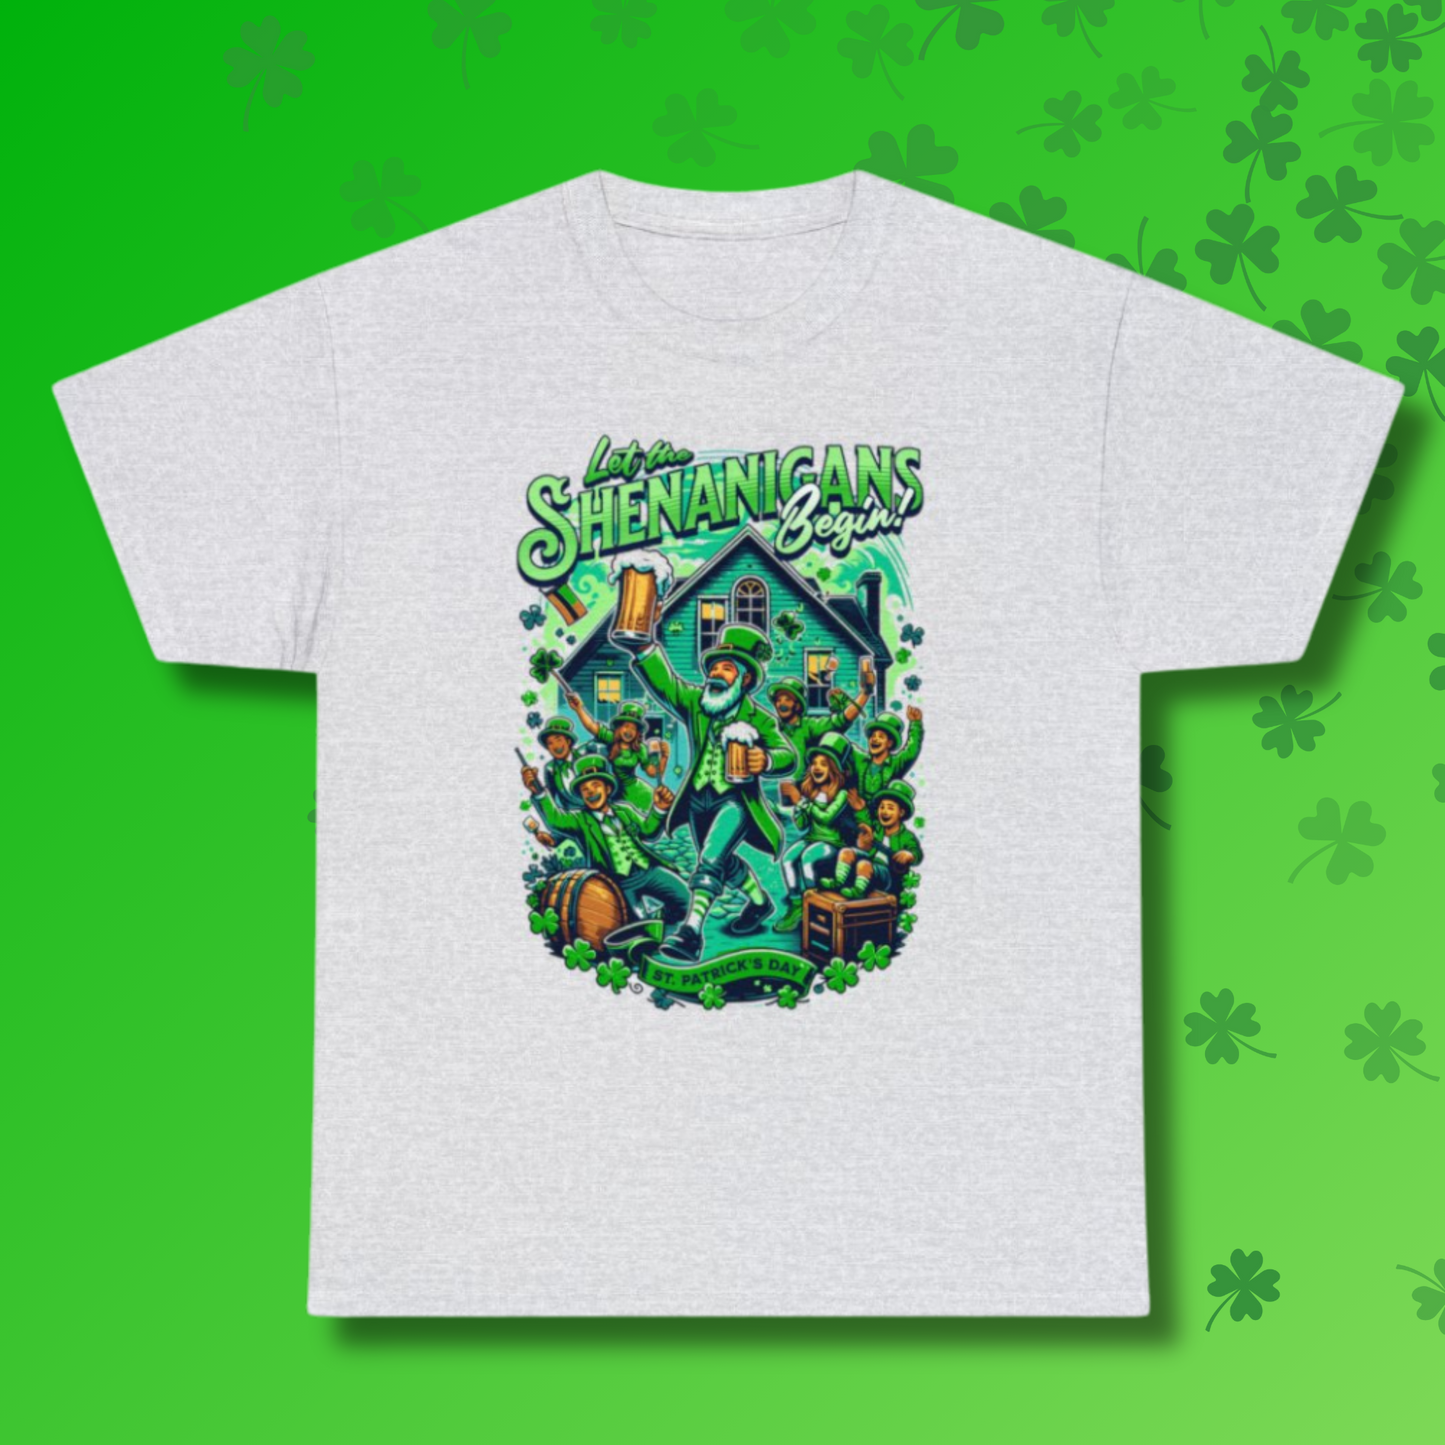 Let the Shenanigans Begin! - St. Patrick's Day Themed T-Shirt, St. Patrick's Day celebration shirt